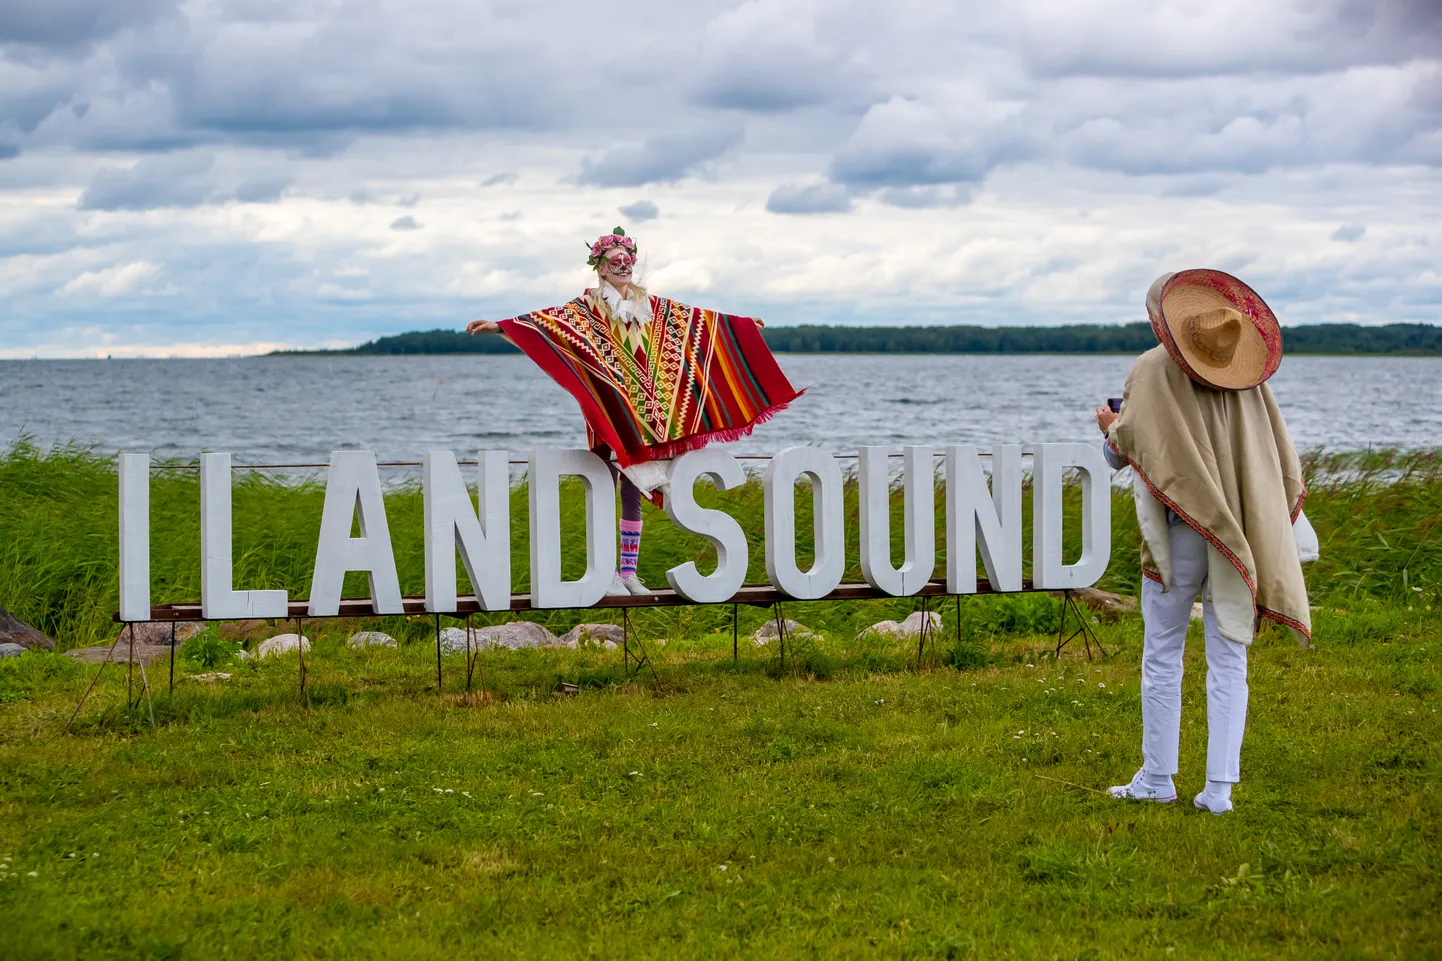 I Land Sound festival 2022.